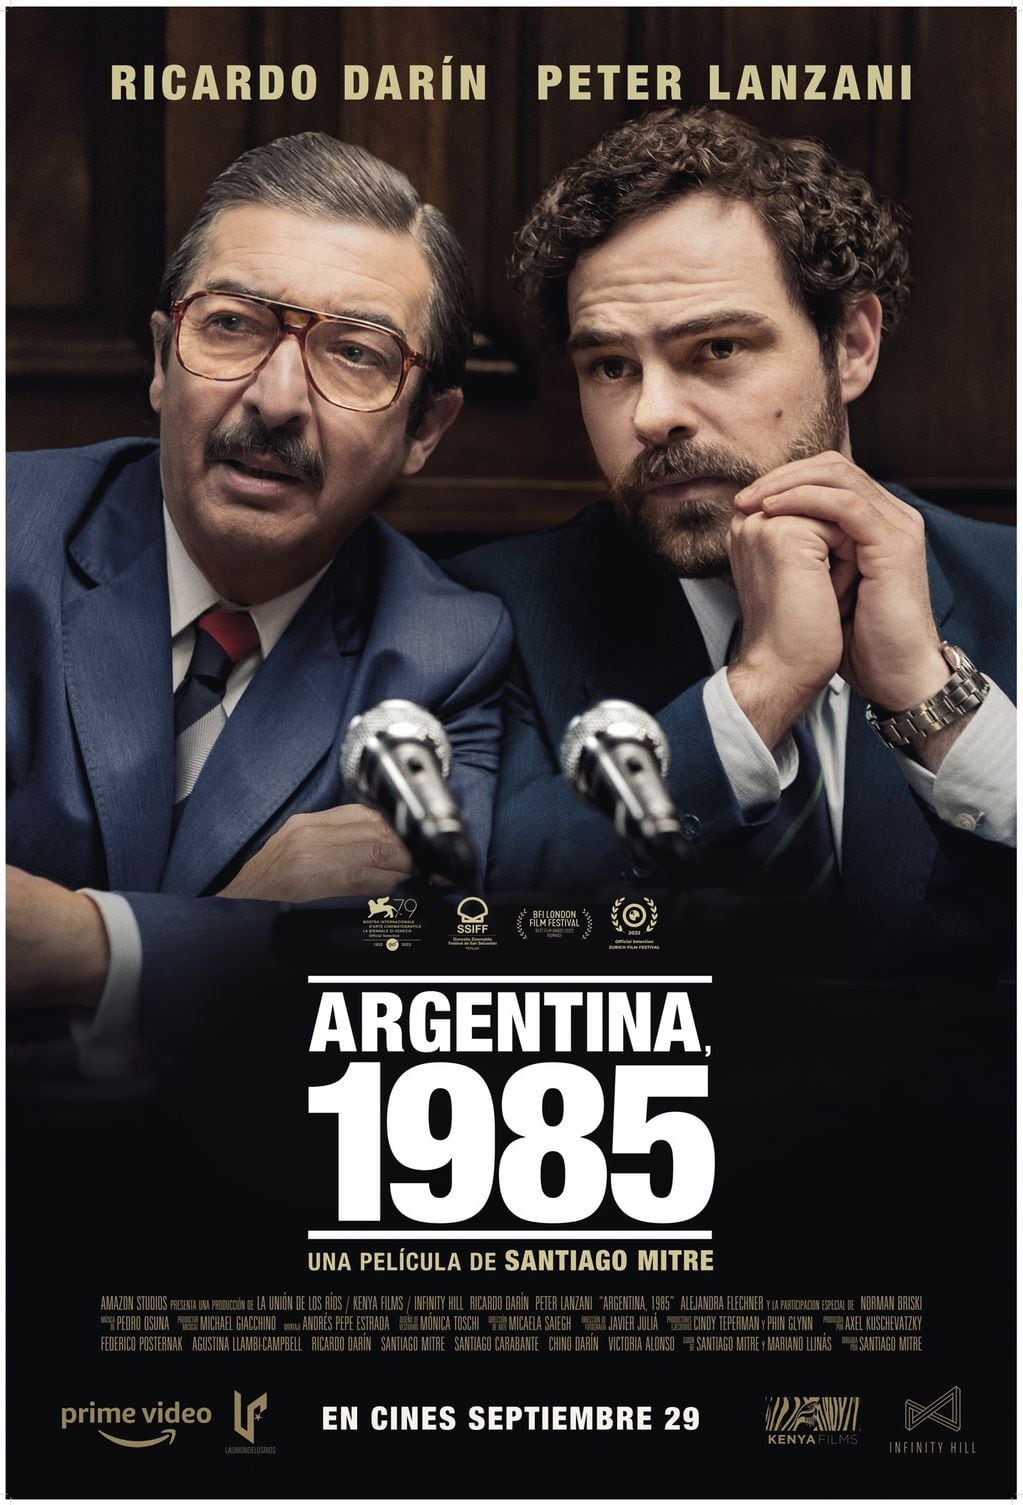 Póster oficial de "Argentina, 1985" (Amazon)